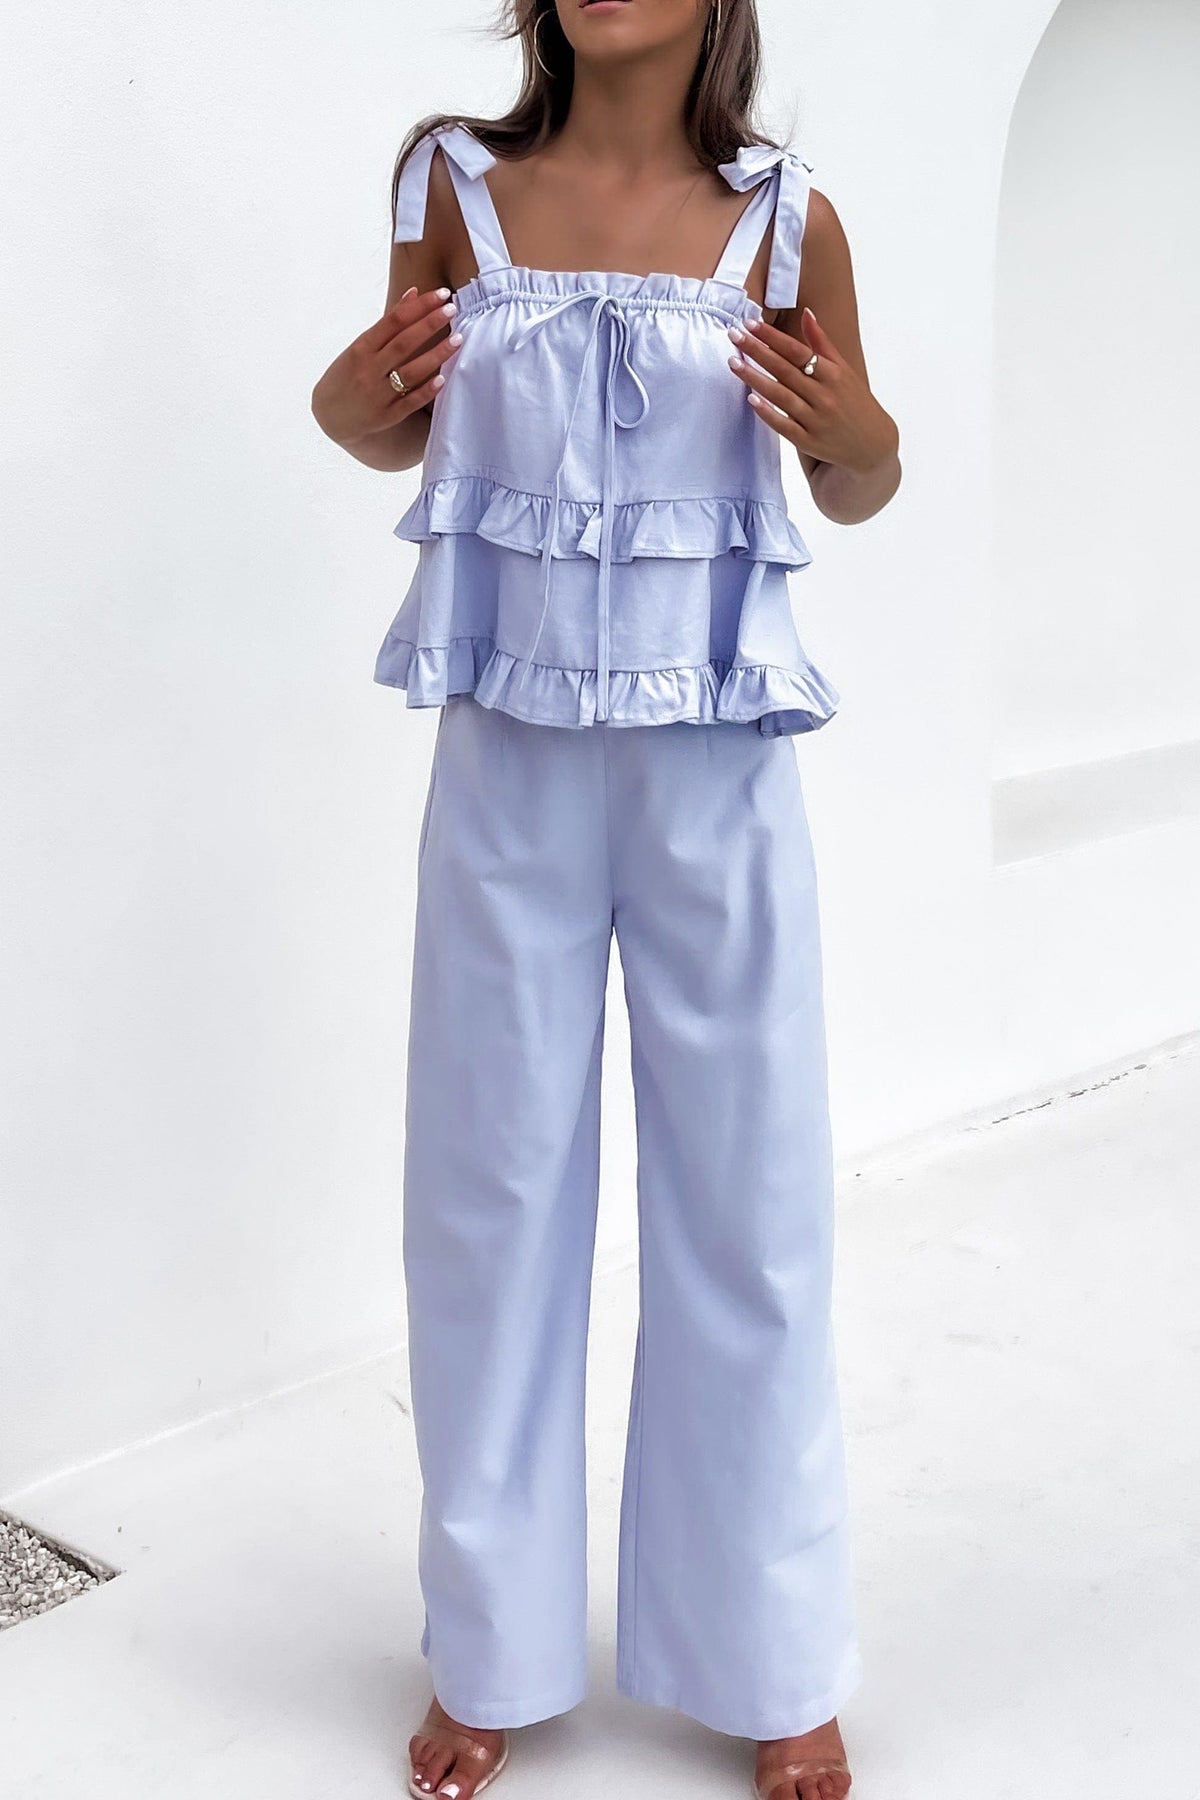 Francina Pants, BLUE, BOTTOMS, COTTON, GREY, LINEN, PANTS, SALE, , Our New Francina Pants is only $66.00-We Have The Latest Pants | Shorts | Skirts @ Mishkah Online Fashion Boutique-MISHKAH